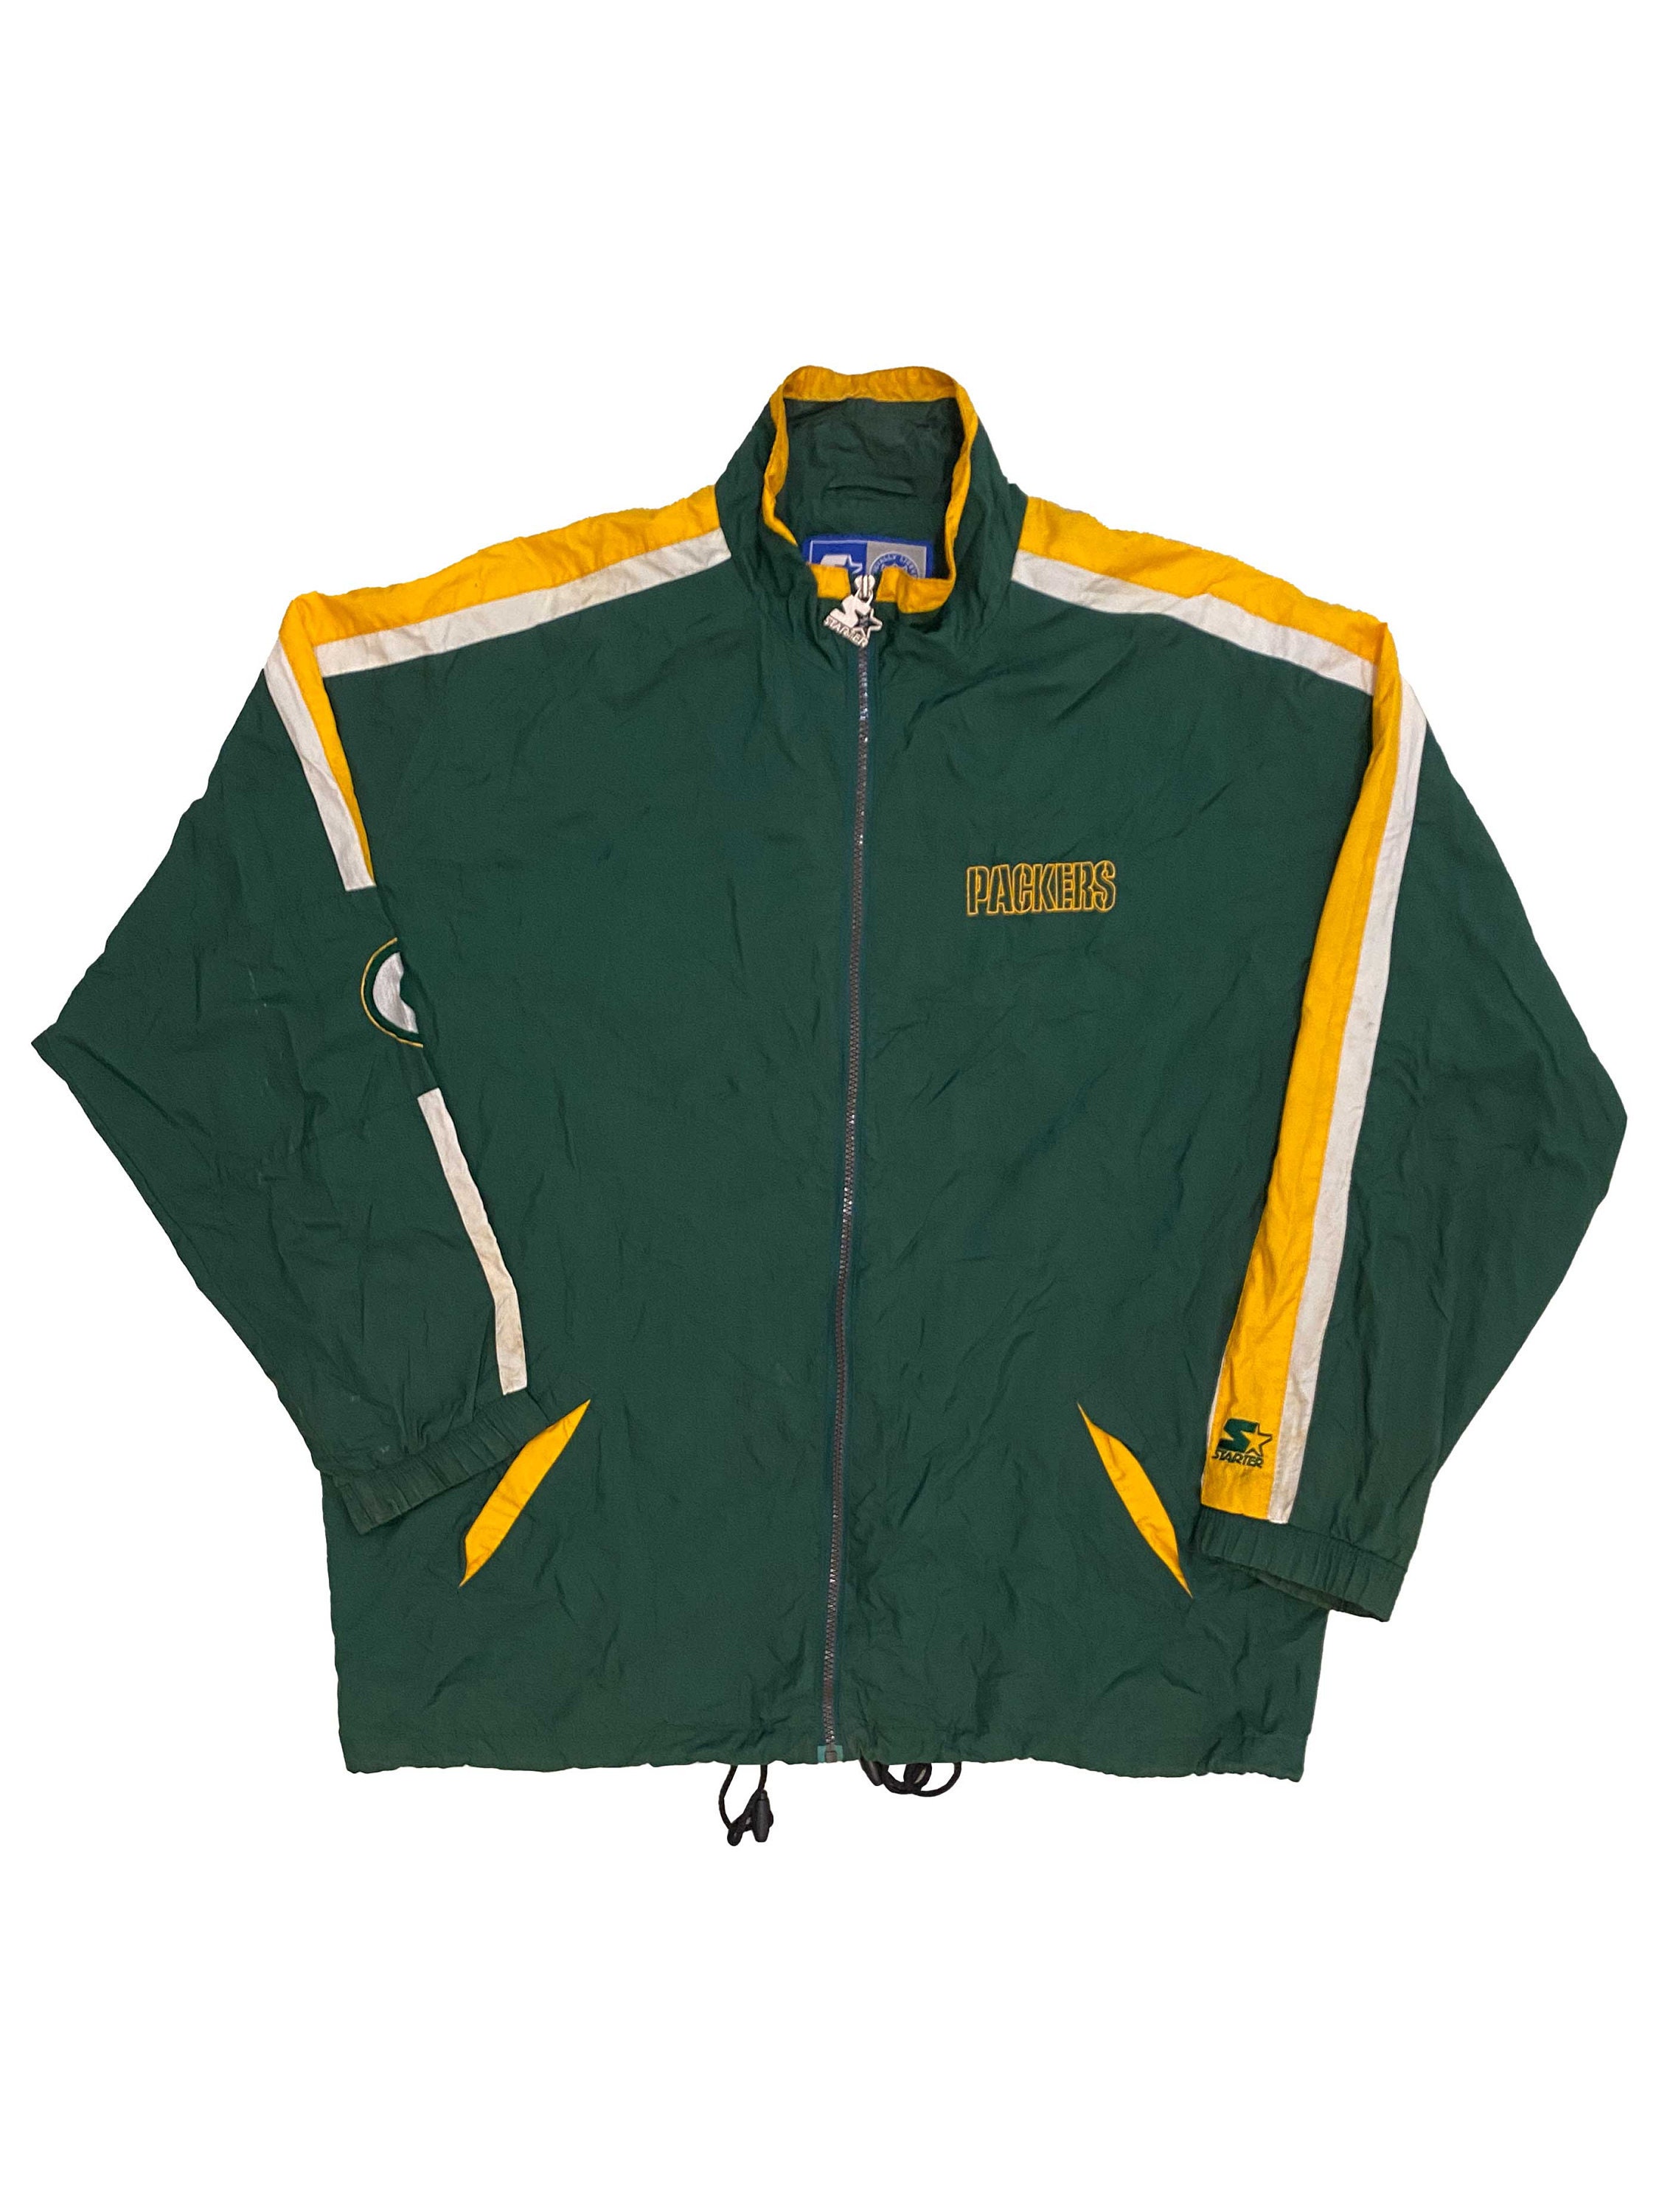 Vintage 90s Starter NFL Green Bay Packers Jacket Size XL | Etsy